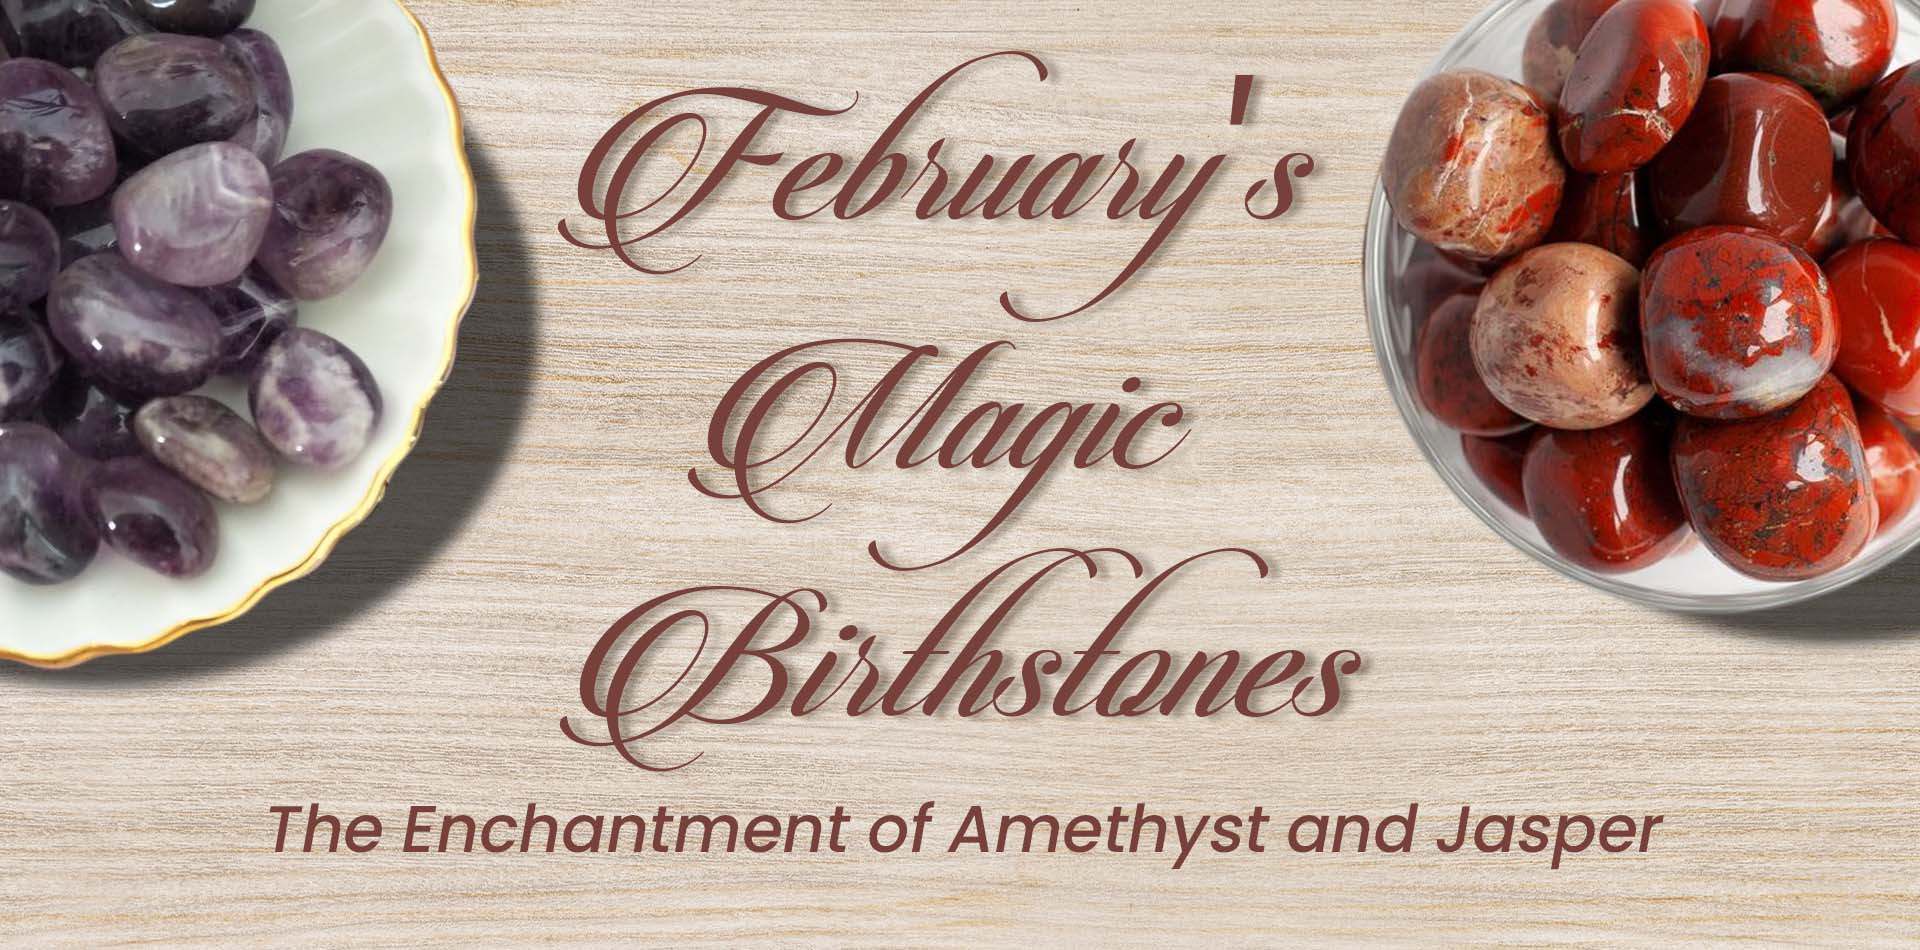 February's Magic Birthstones: The Enchantment of Amethyst and Jasper